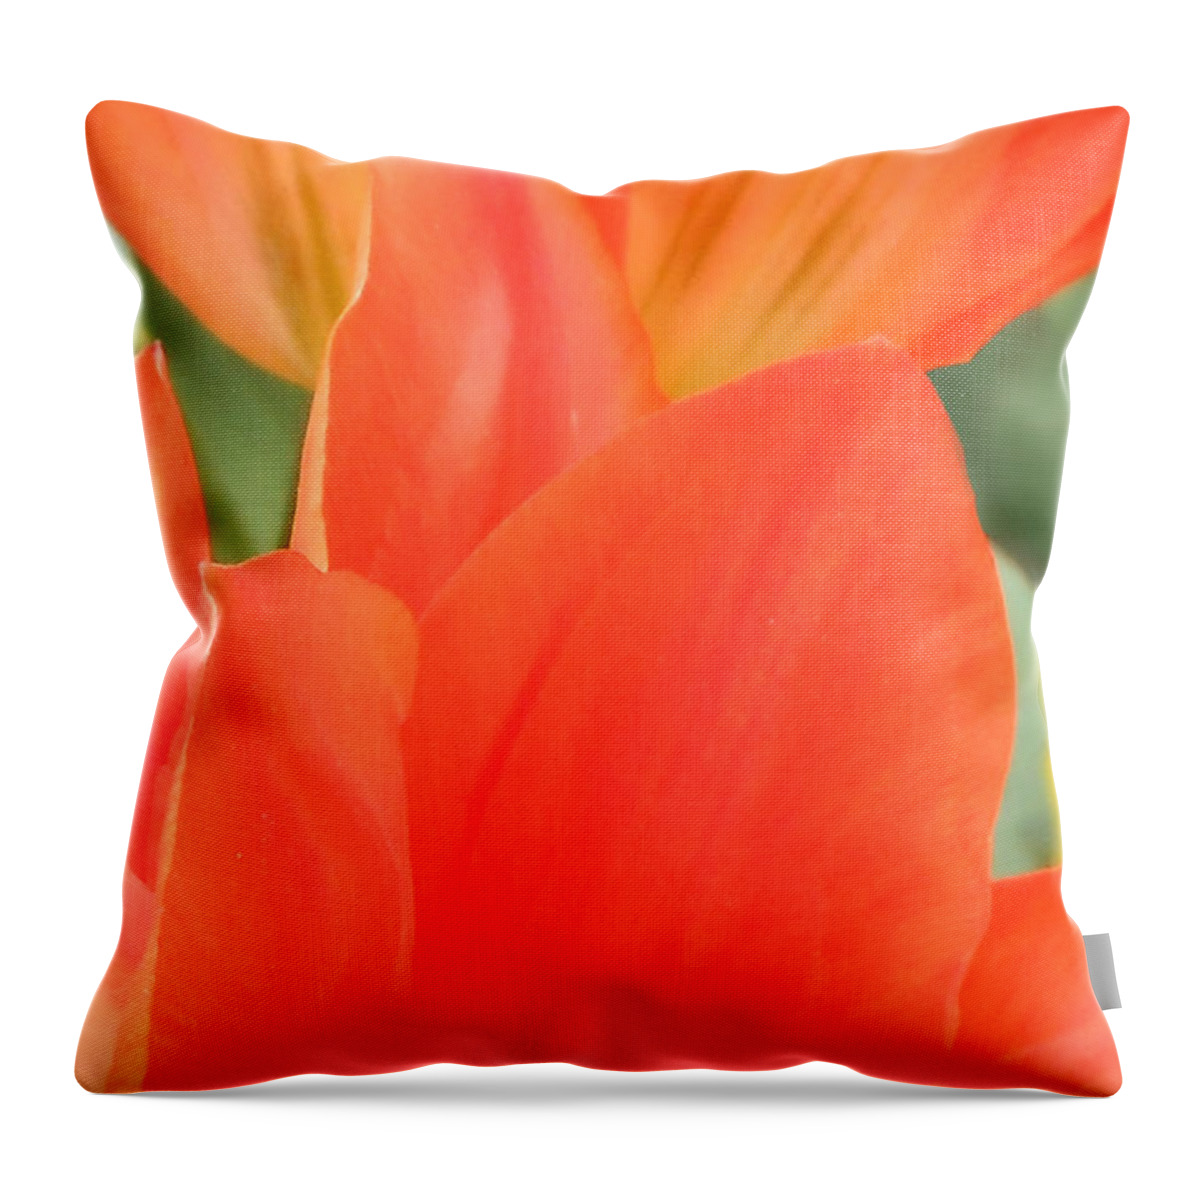 Orange Tulip Throw Pillow featuring the photograph Orange Emperor Tulips by Kristin Aquariann